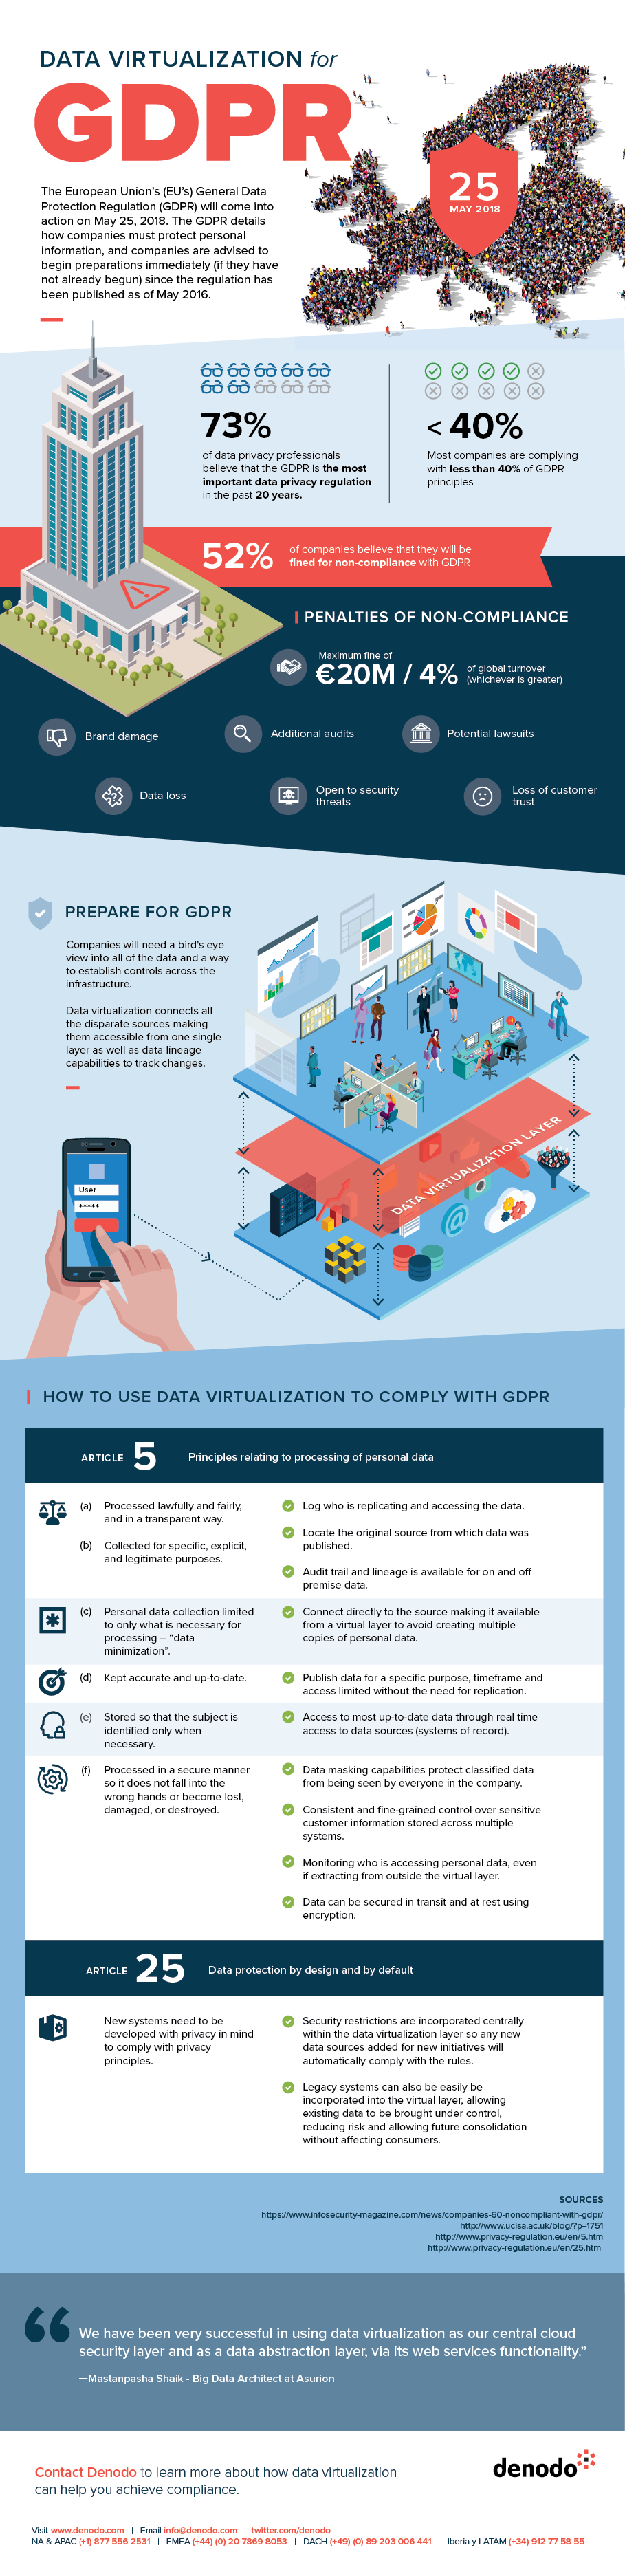 Data-Virtualization-GDPR-Infographic-By-Denodo